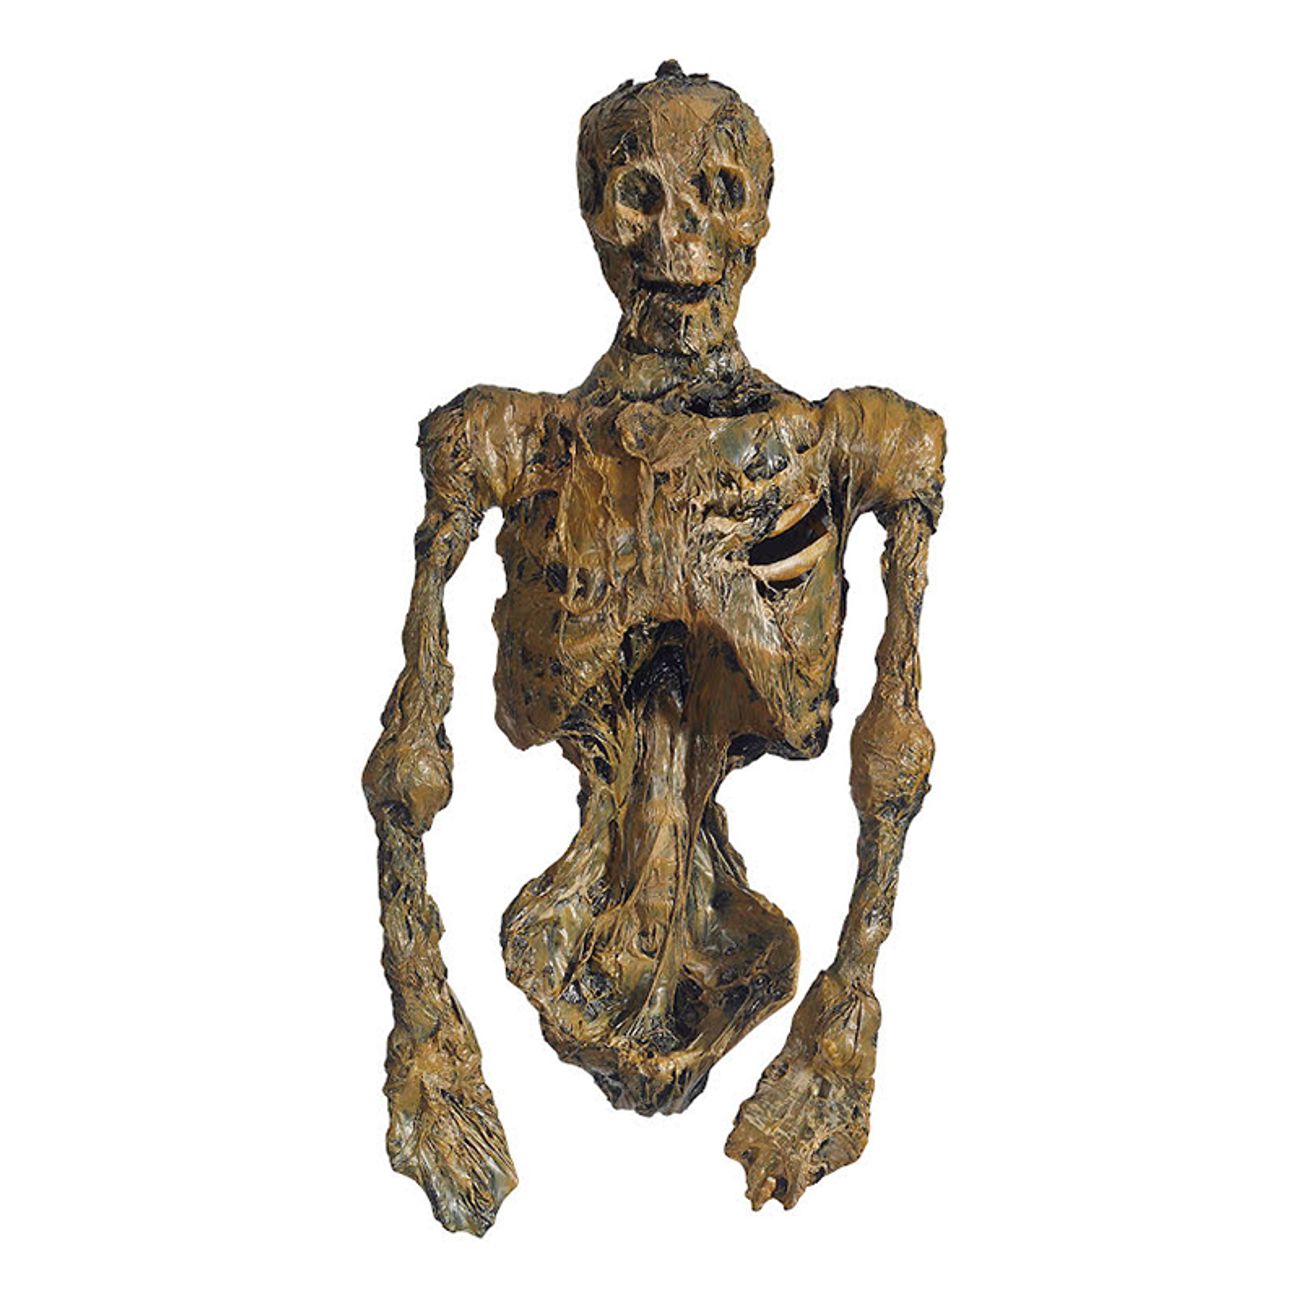 ruttet-skelett-torso-prop-77843-1